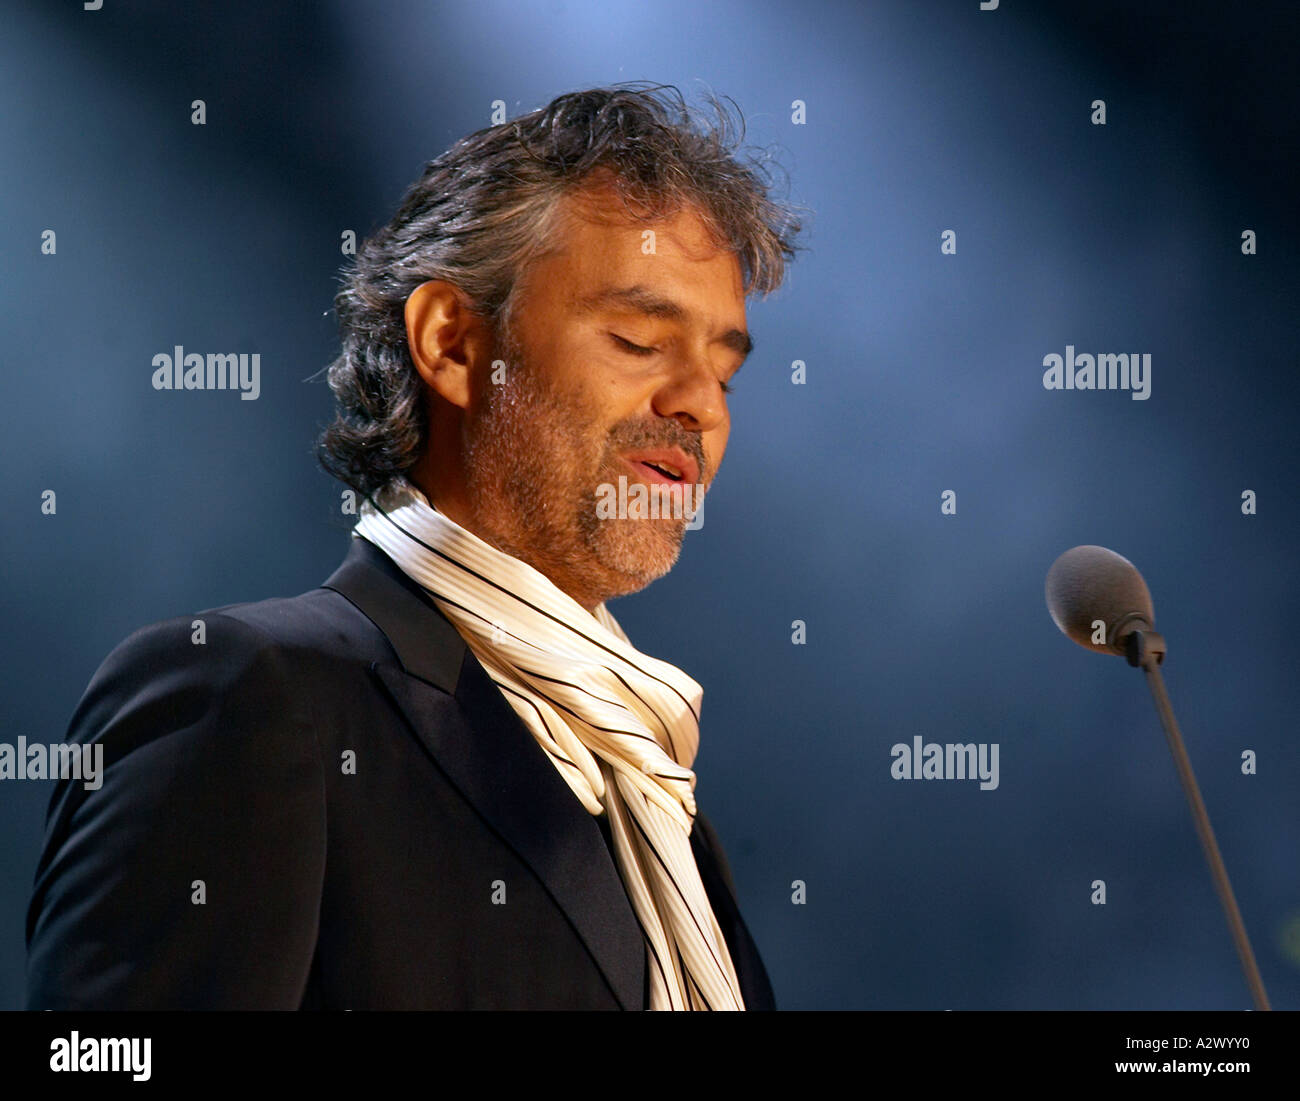 Italian Opera star, Andrea Bocelli in concert Stock Photo